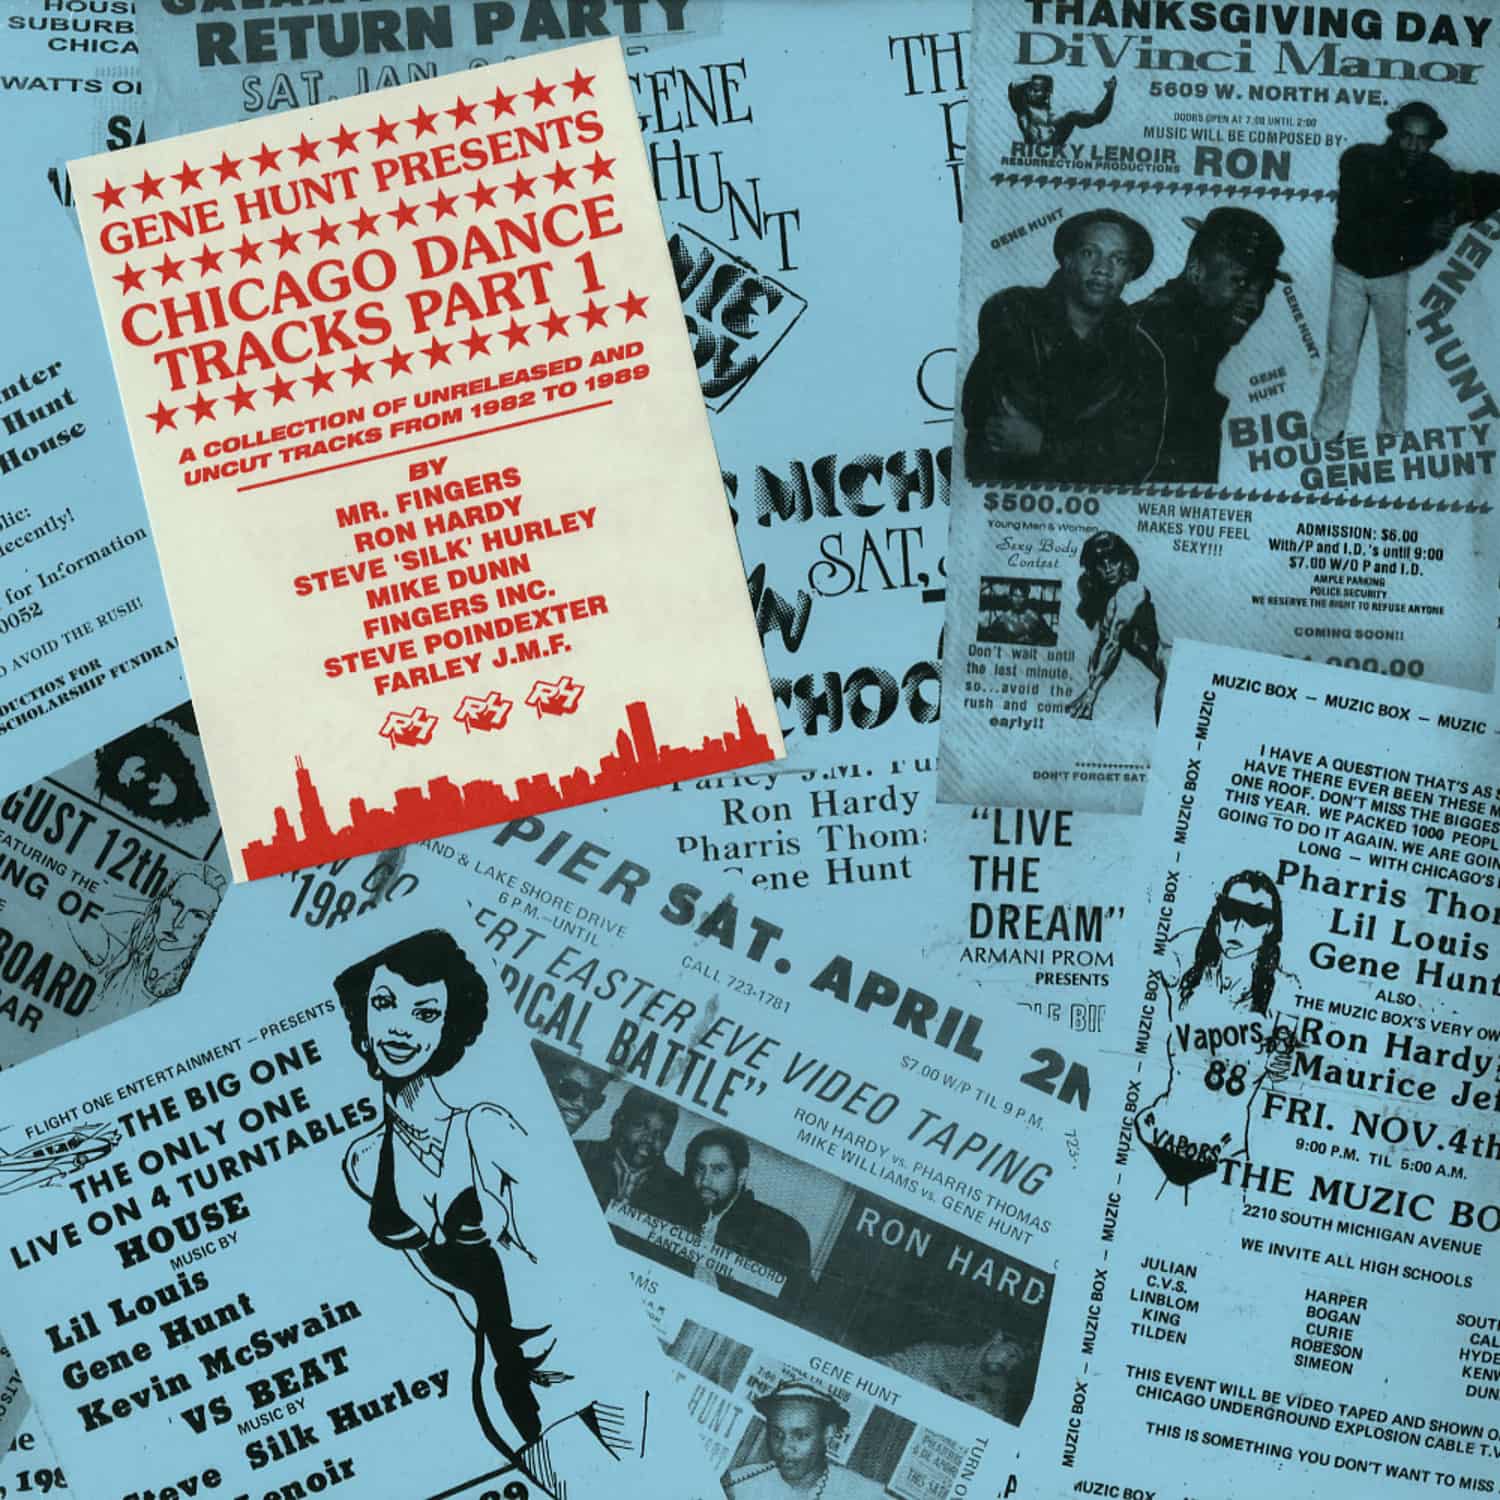 Gene Hunt presents - CHICAGO DANCE TRACKS PART 1 